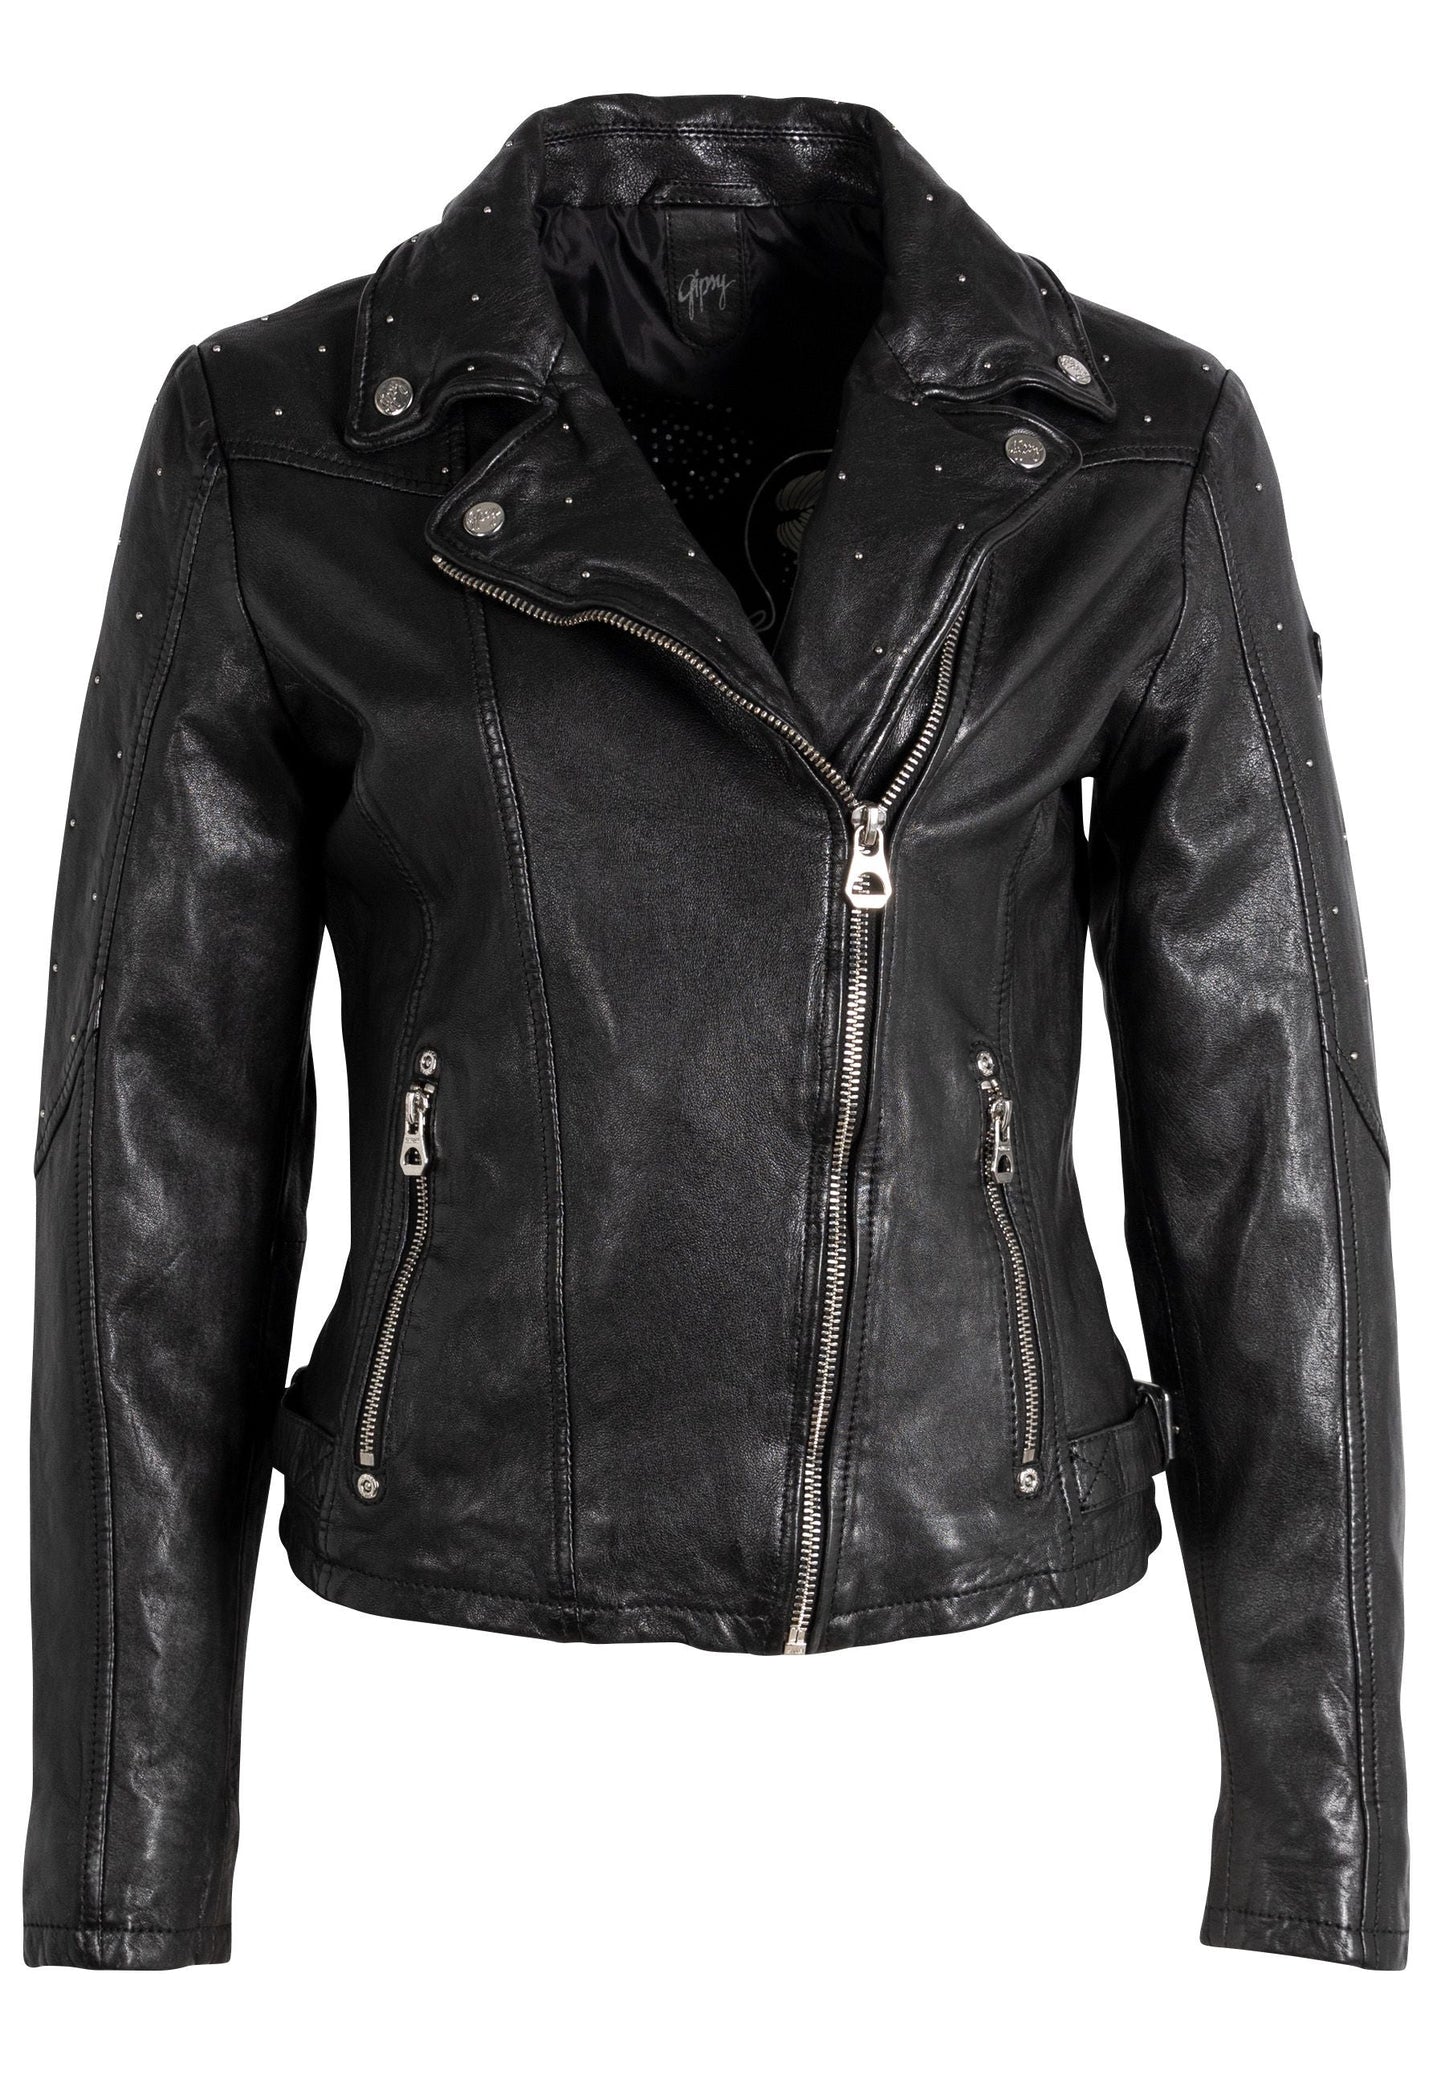 Aleeza RF Leather Jacket, Black